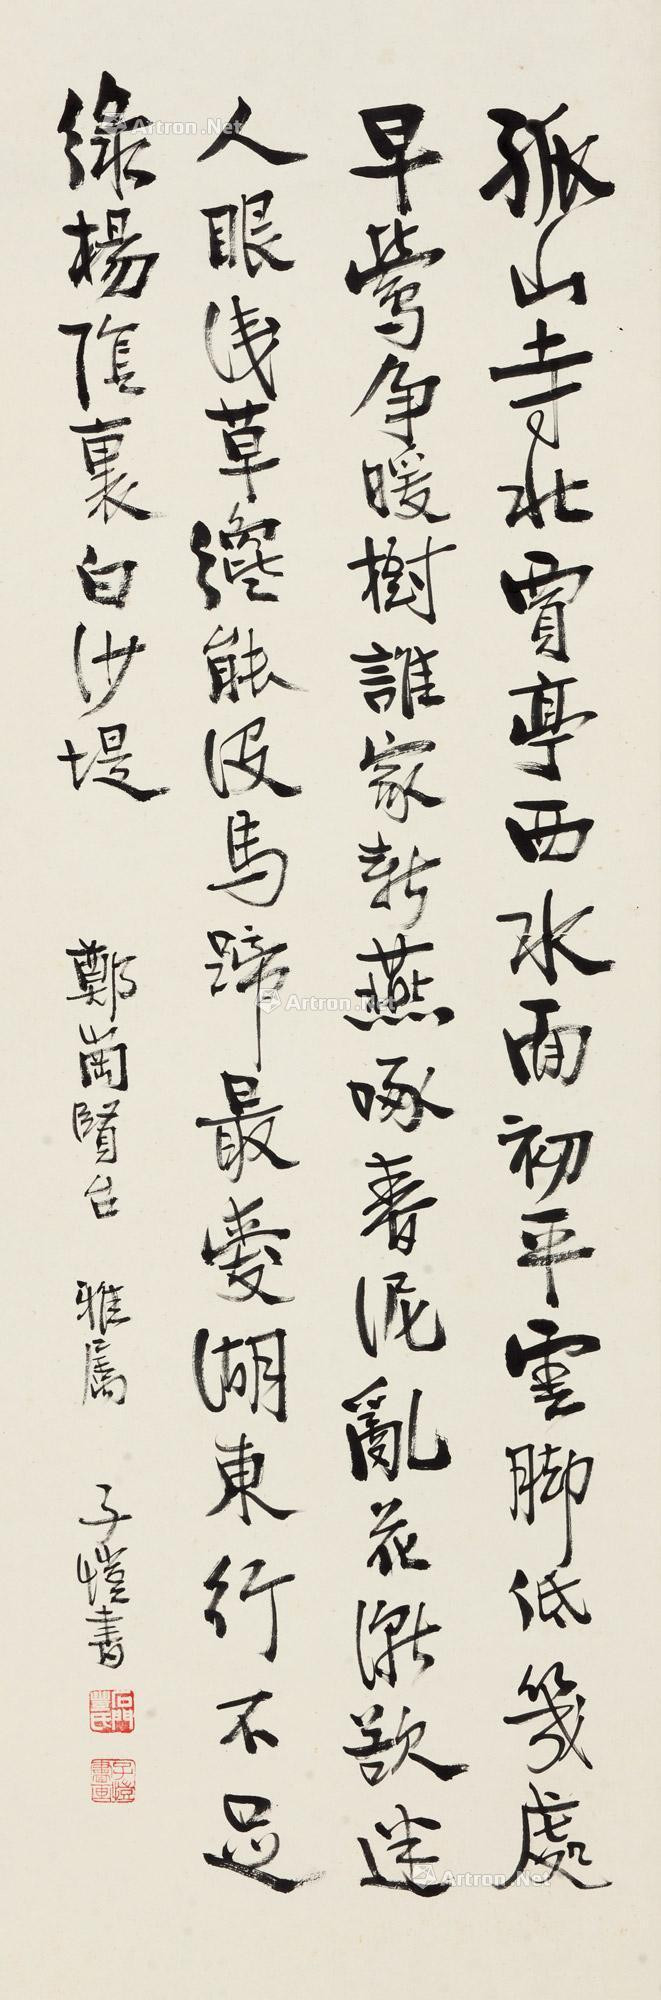 Calligraphy of Baijuyi’s Poem